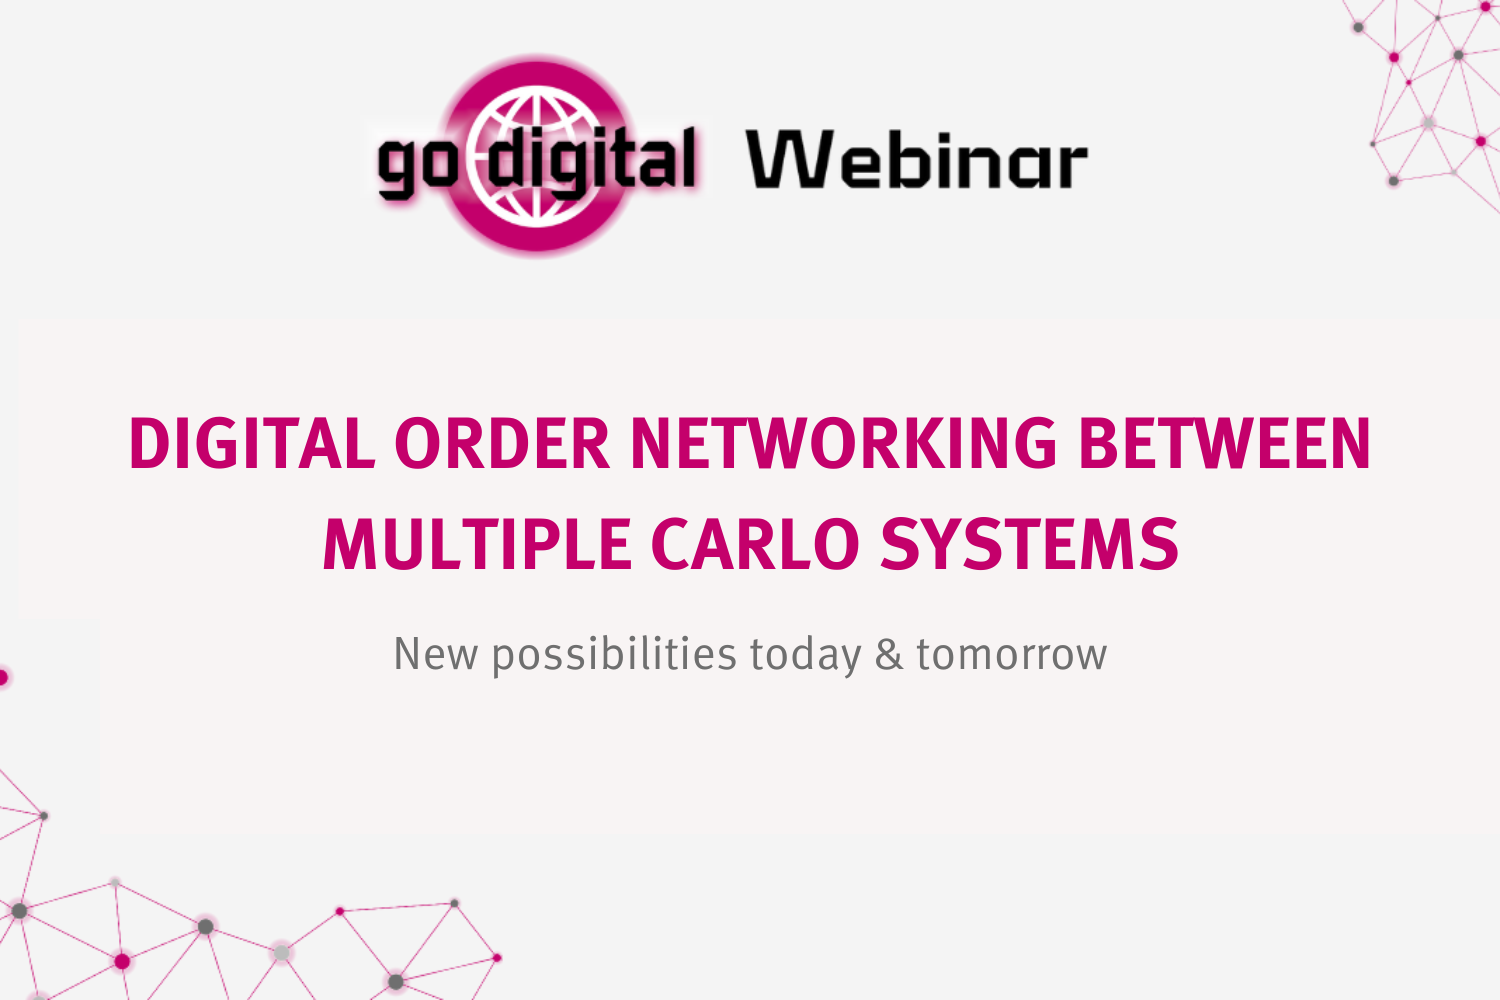 GO DIGITAL: Digital order networking between multiple CarLo systems